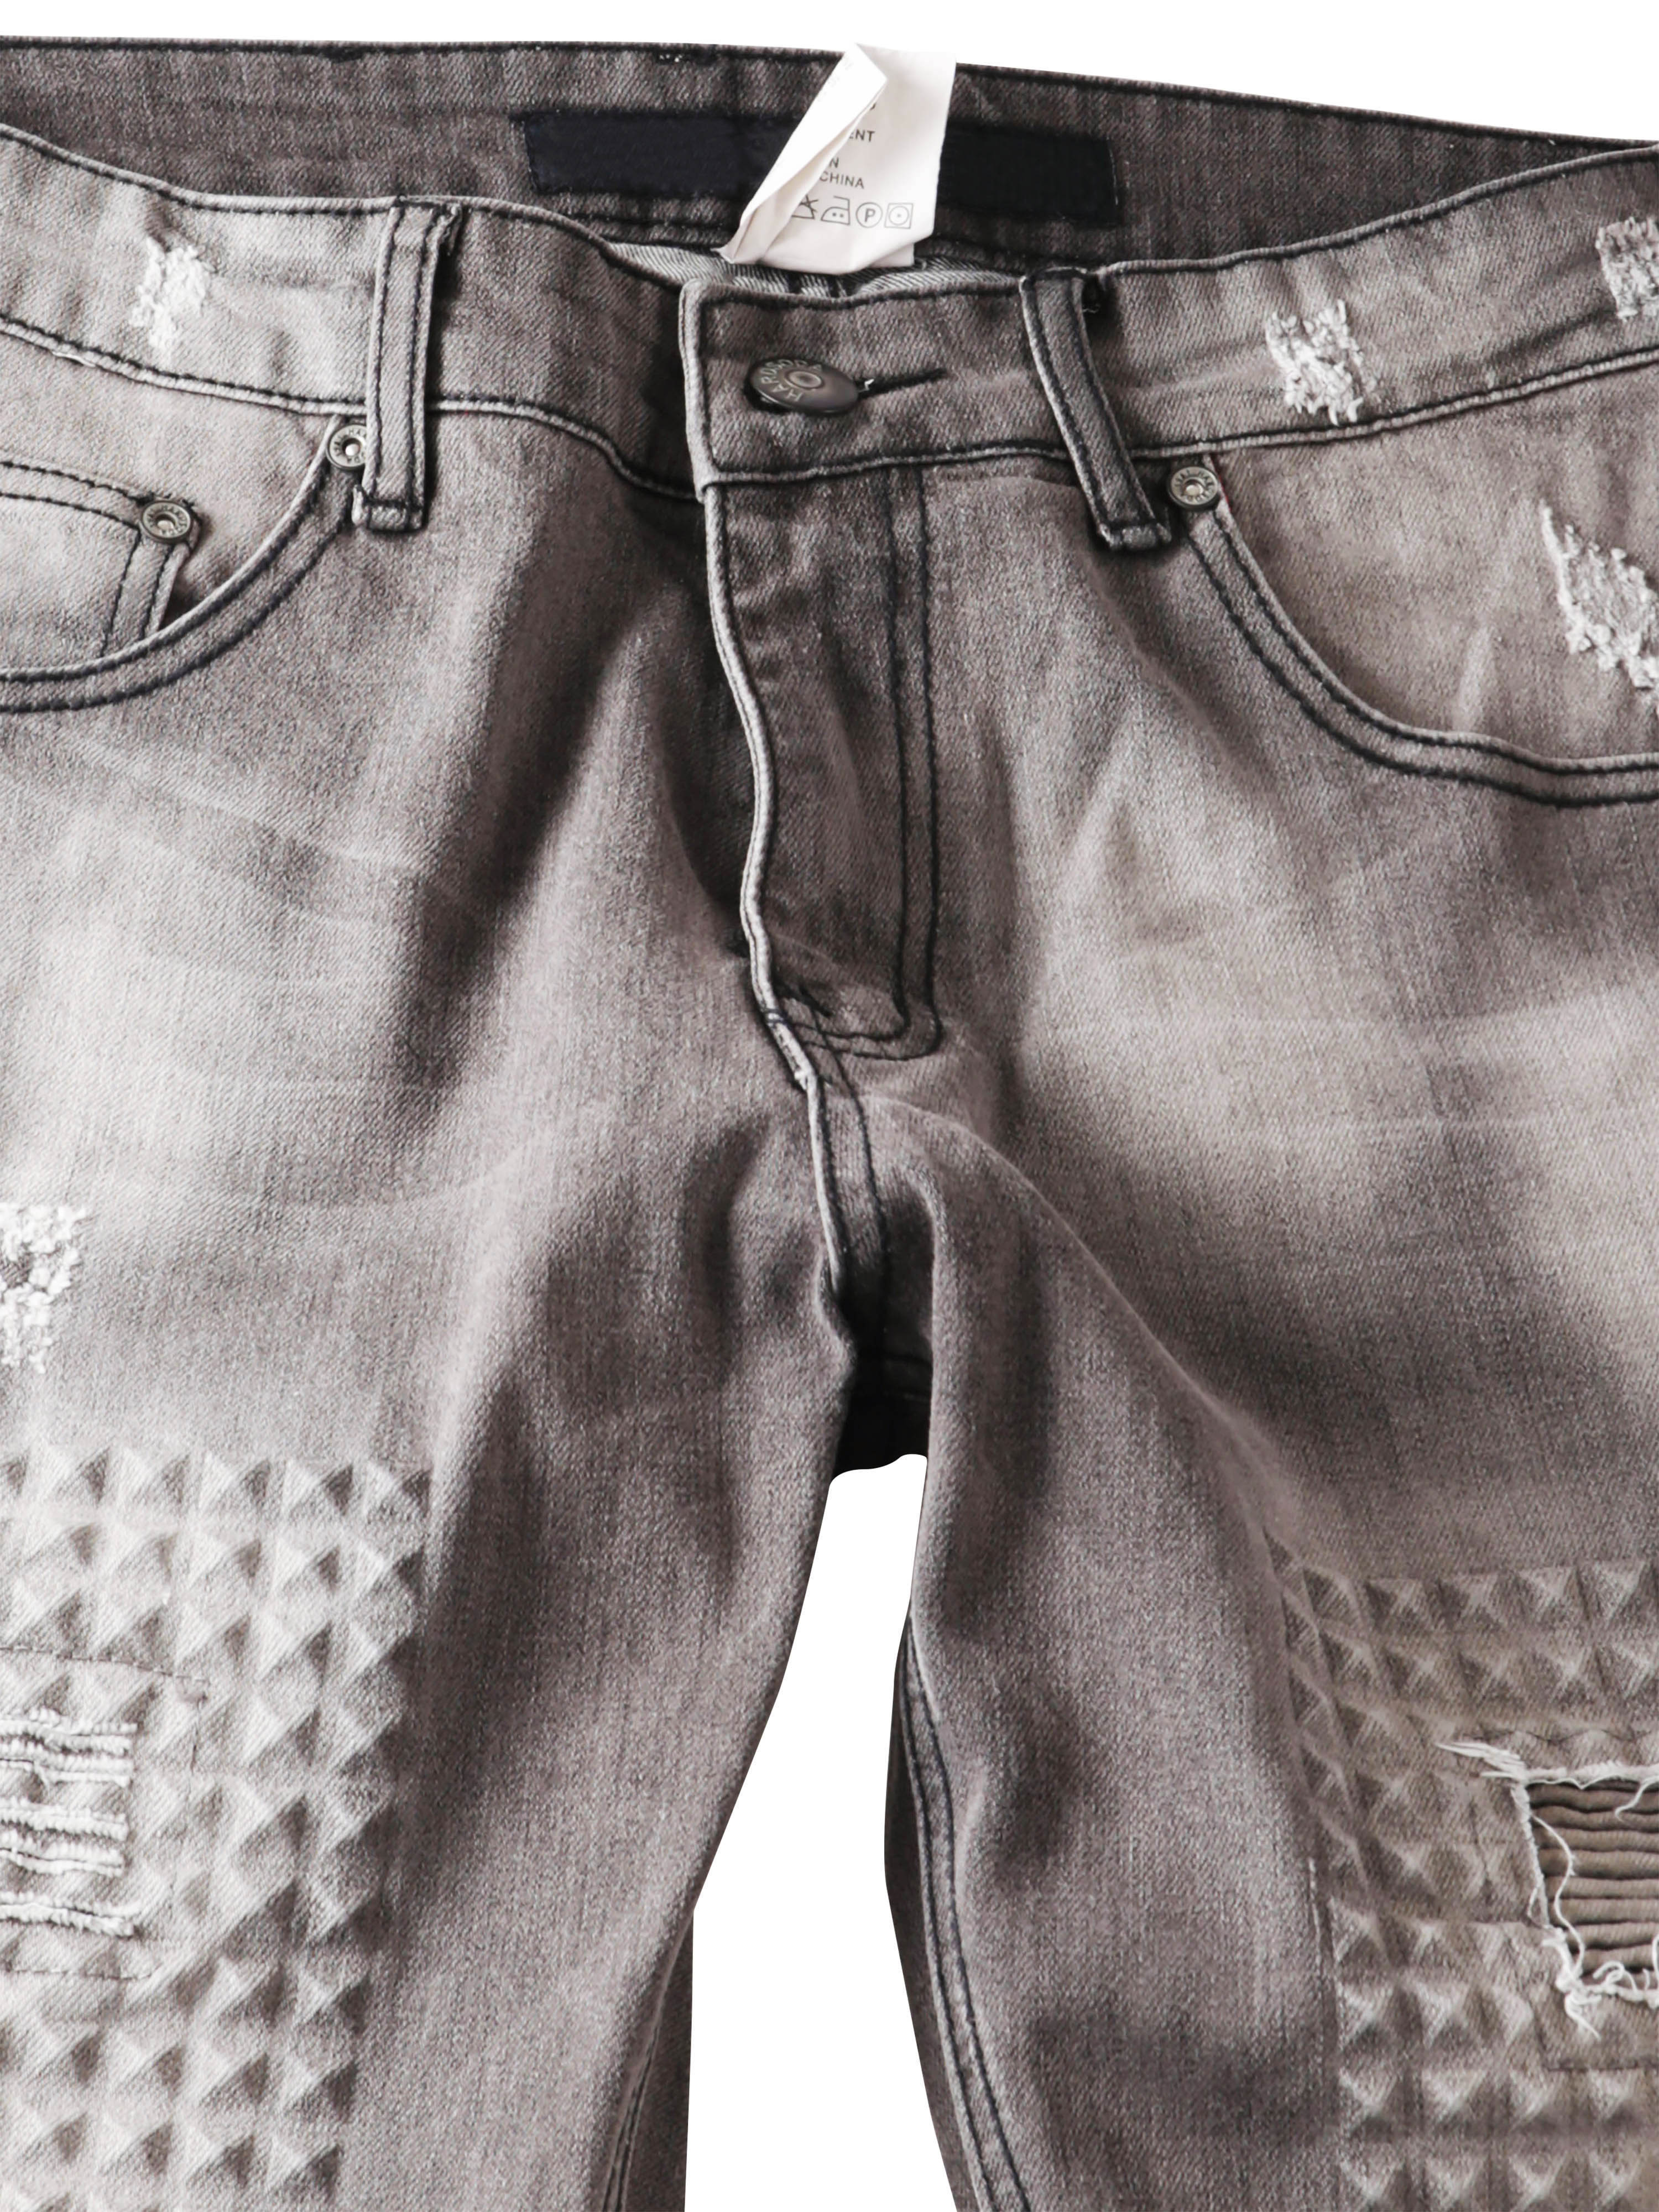 Ma Croix Mens Faded Washed Slim Biker Denim Jeans - image 3 of 6